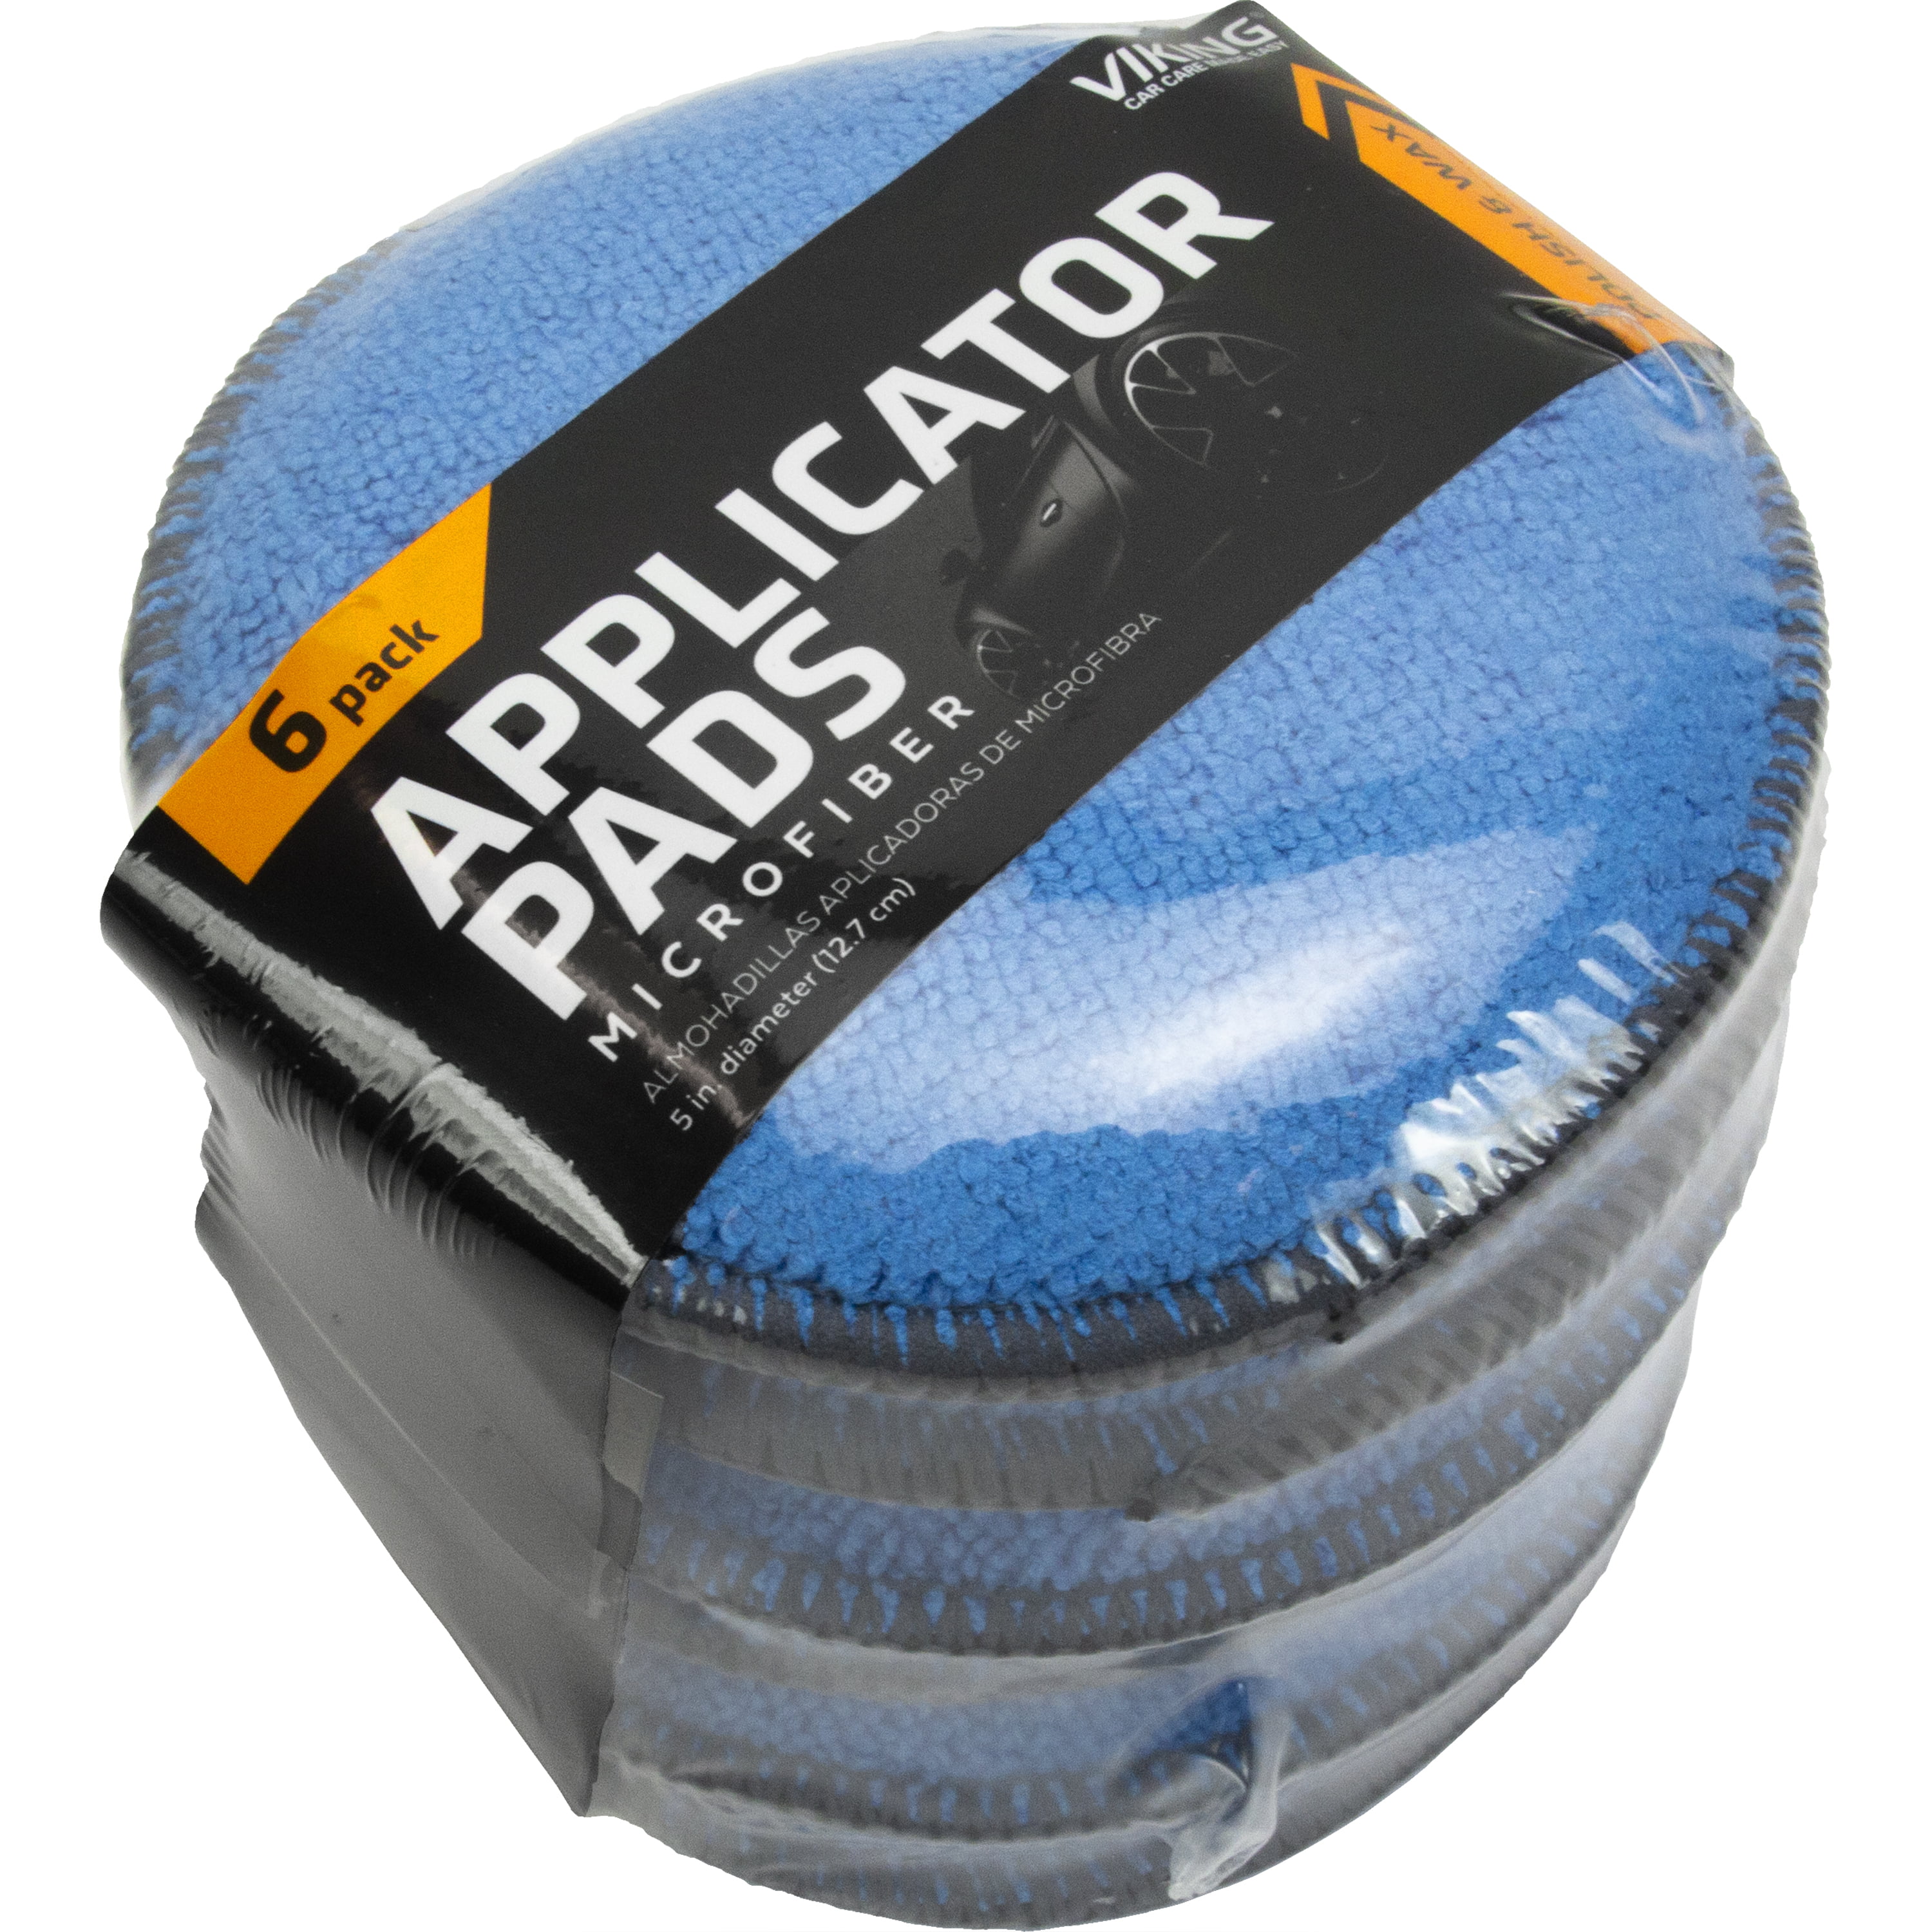 VIKING Microfiber Polishing Pad, Rectangular Applicator Cleaning Pads for  Car Detailing – Blue, 3 inch x 5 inch, 6 Pack